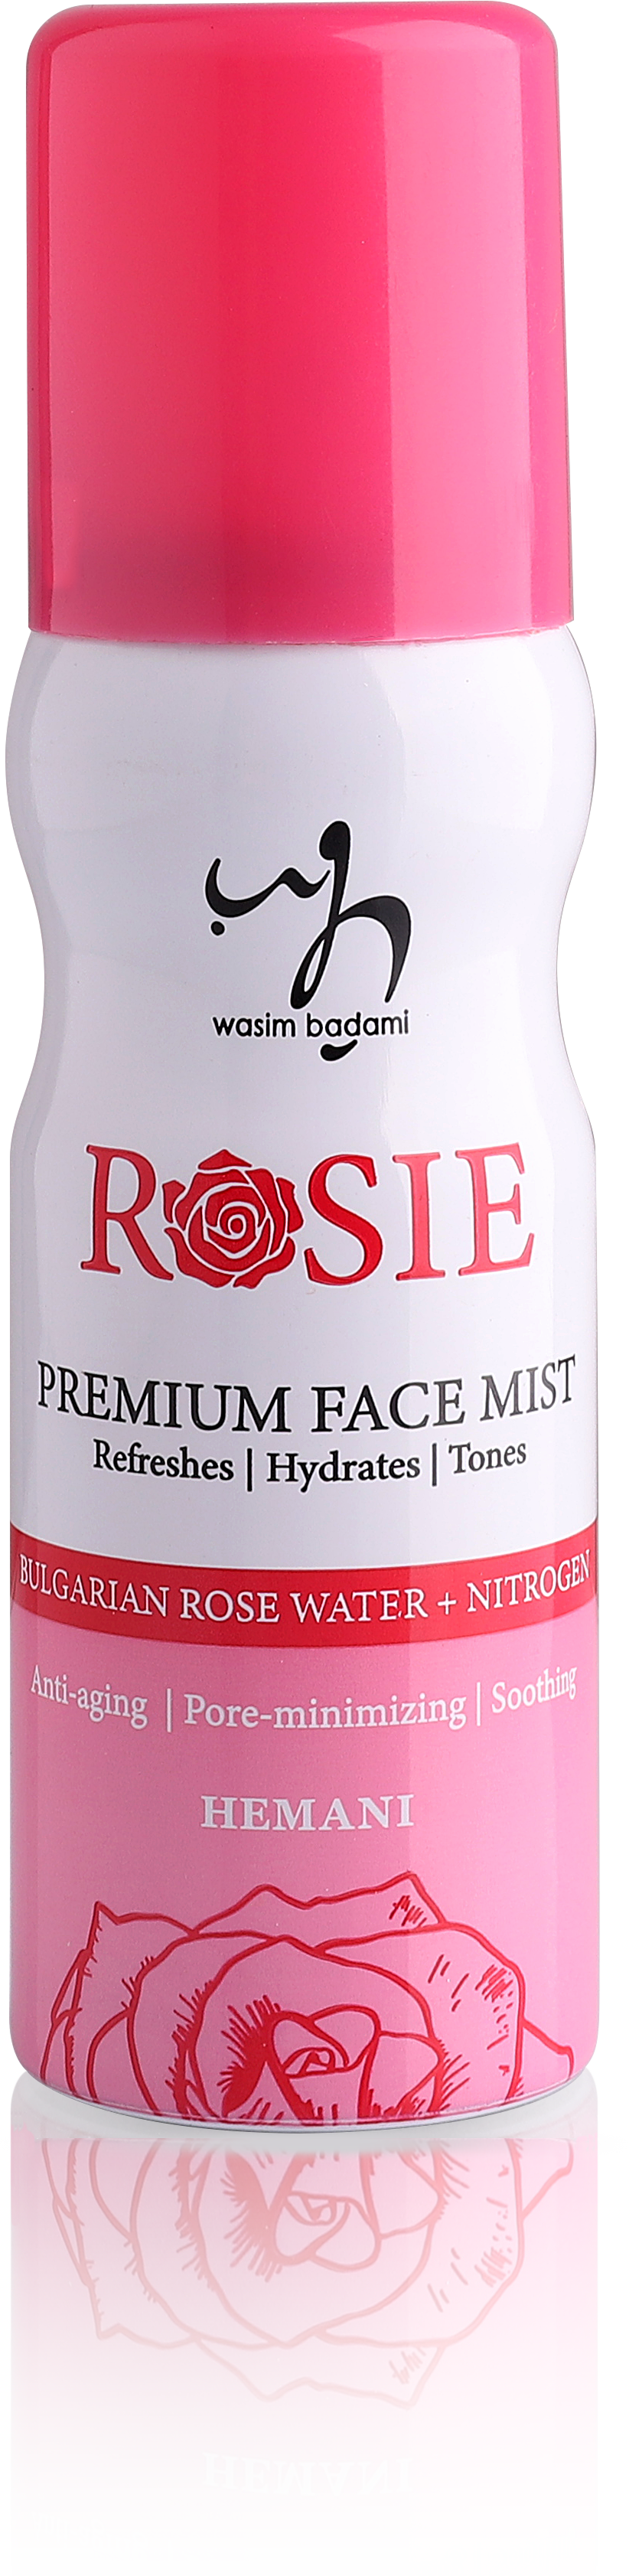 WB HEMANI Rosie Perfume Face Mist 50mL